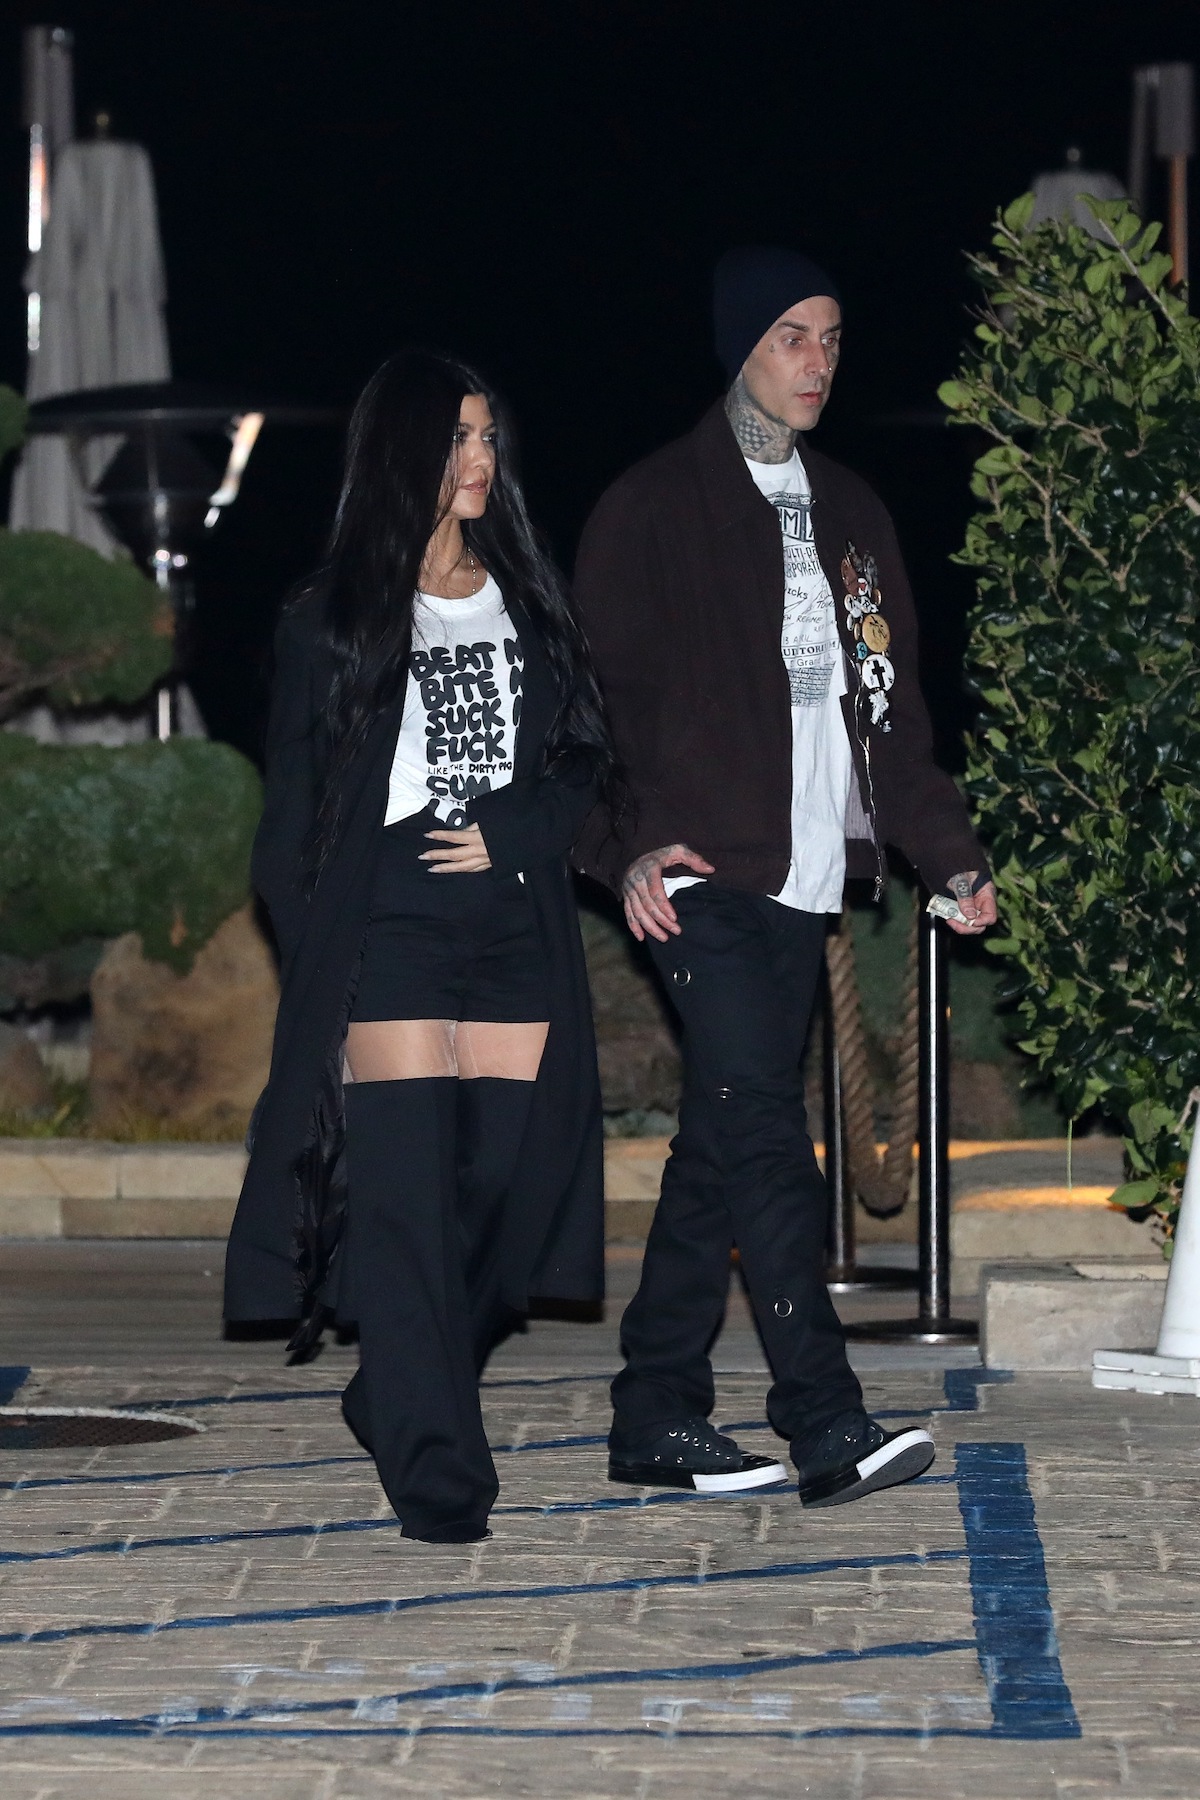 Kourtney Kardashian and Travis Barker walk down a street together holding hands.